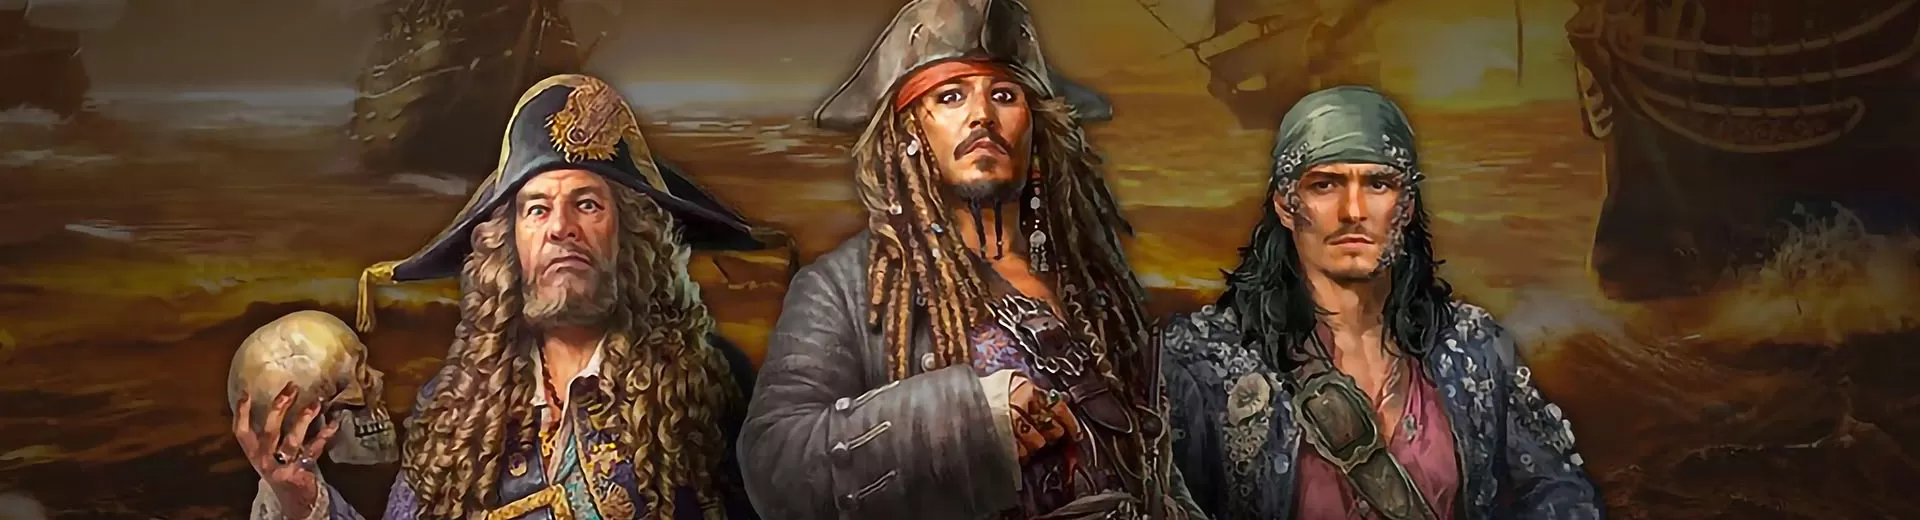 Pirates Of The Caribbean Emulator Pc